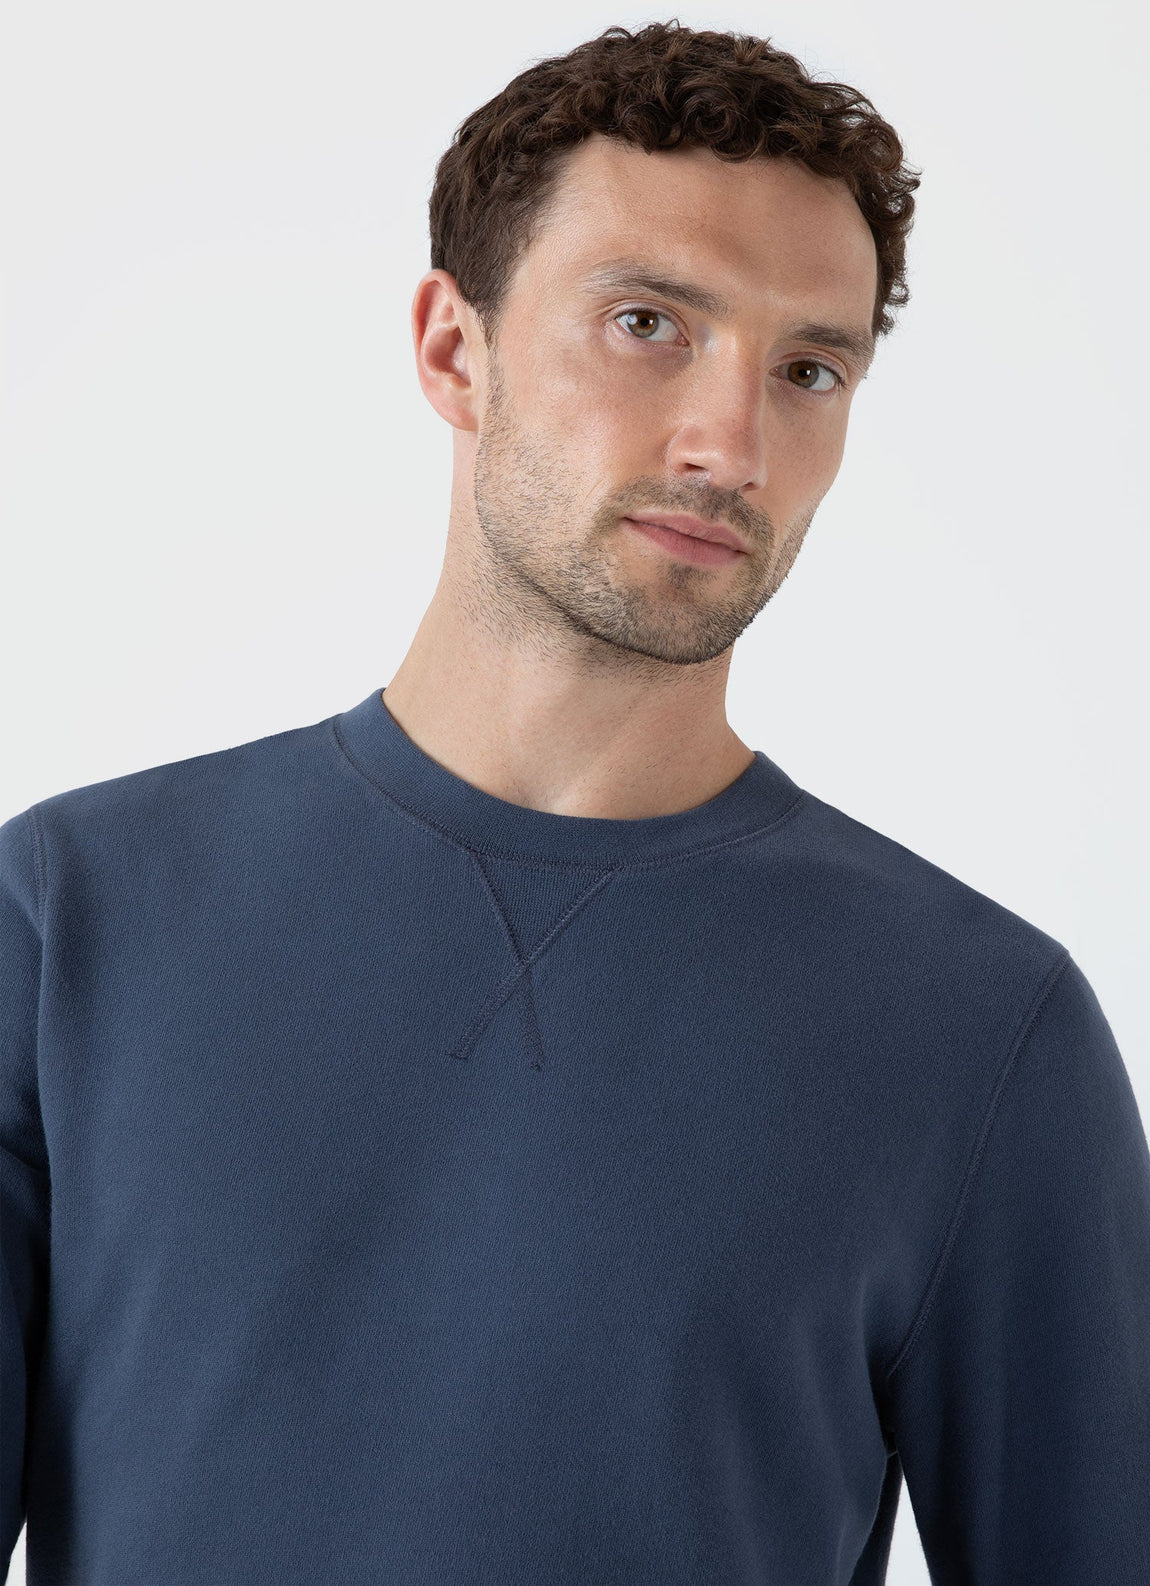 Men's Loopback Sweatshirt in Slate Blue